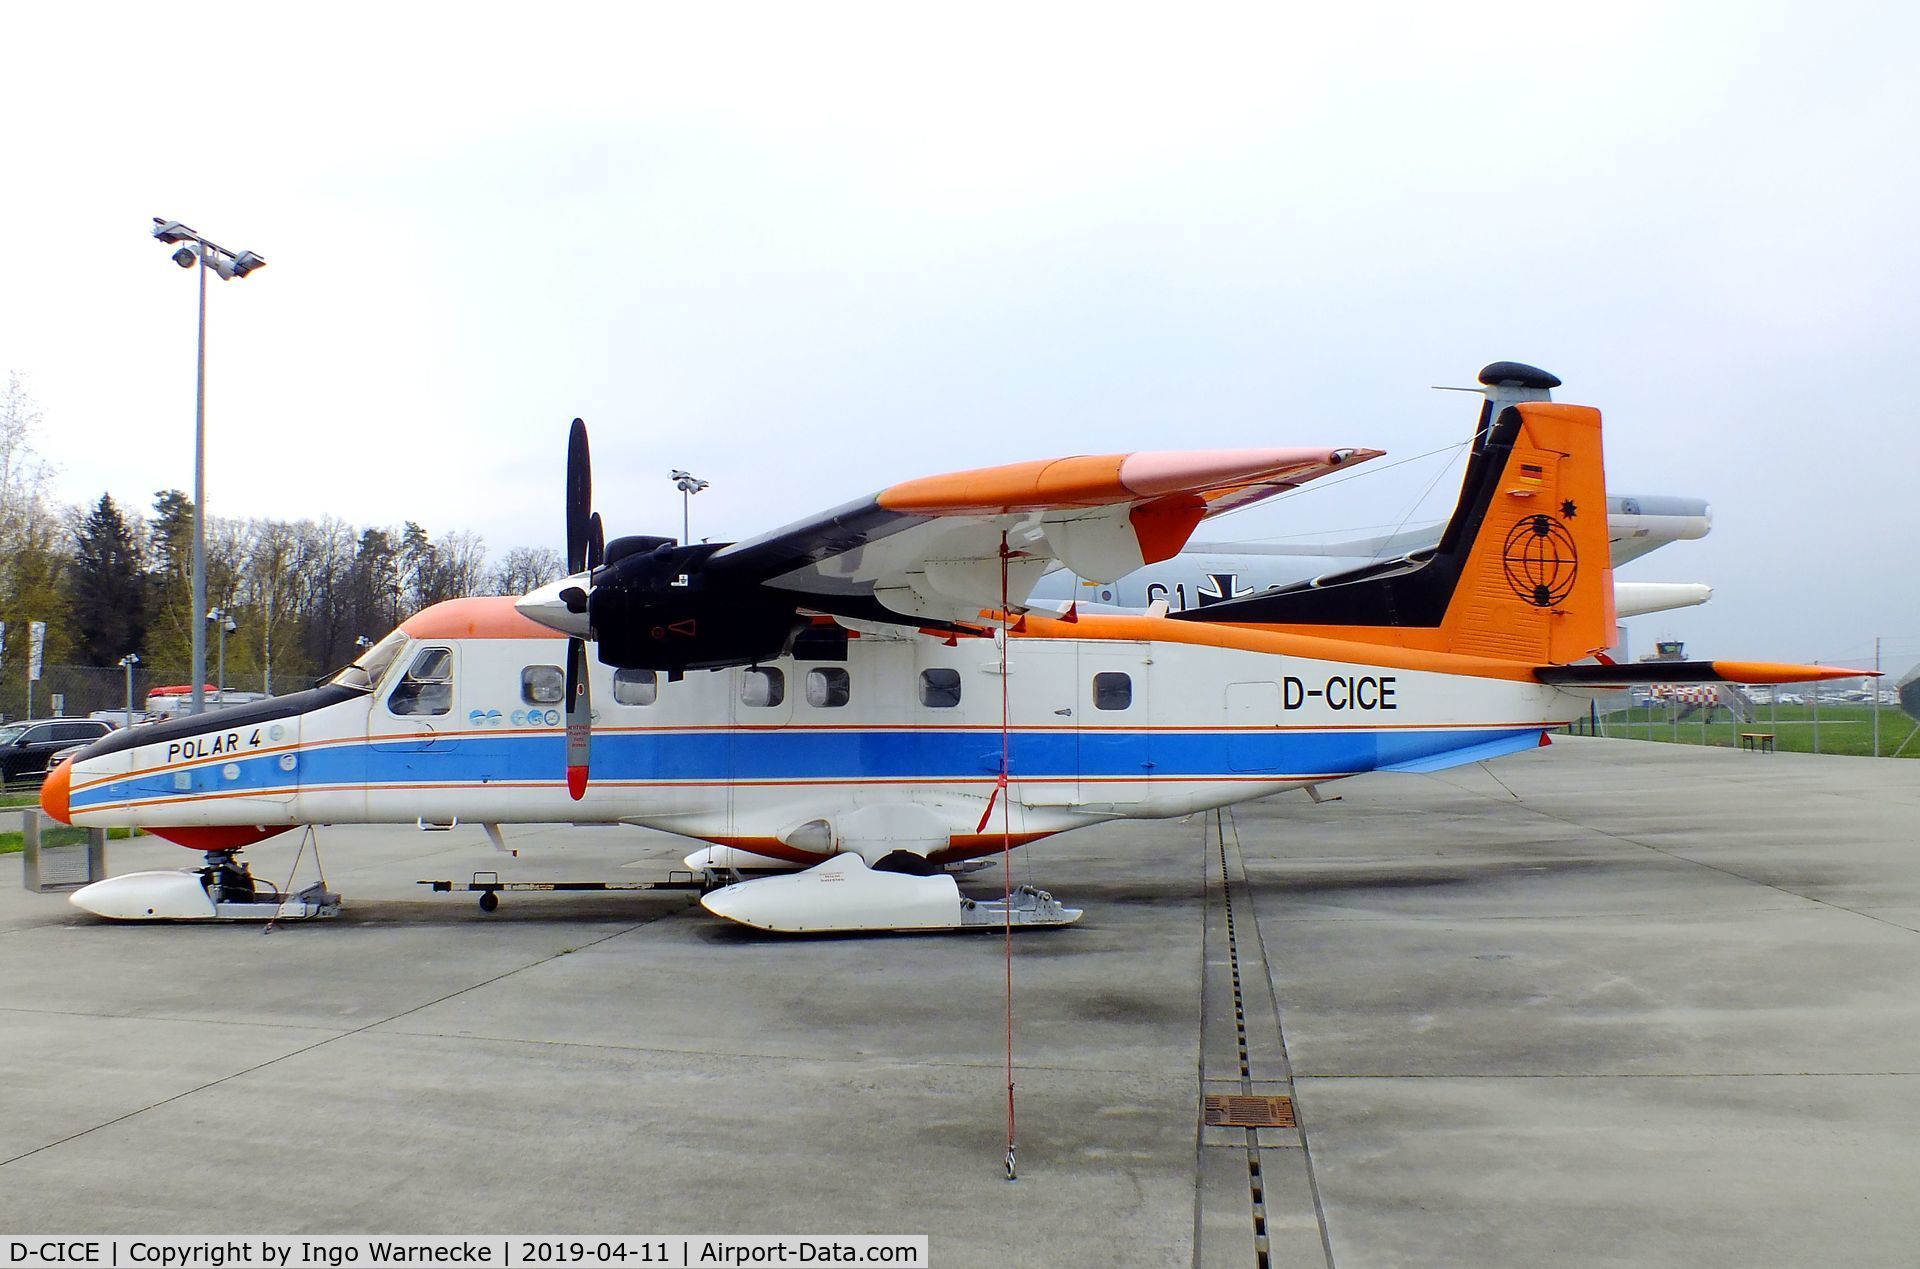 D-CICE, 1985 Dornier 228-101 C/N 7073, Dornier Do 228-101 'Polar 4' at the Dornier Mus, Friedrichshafen